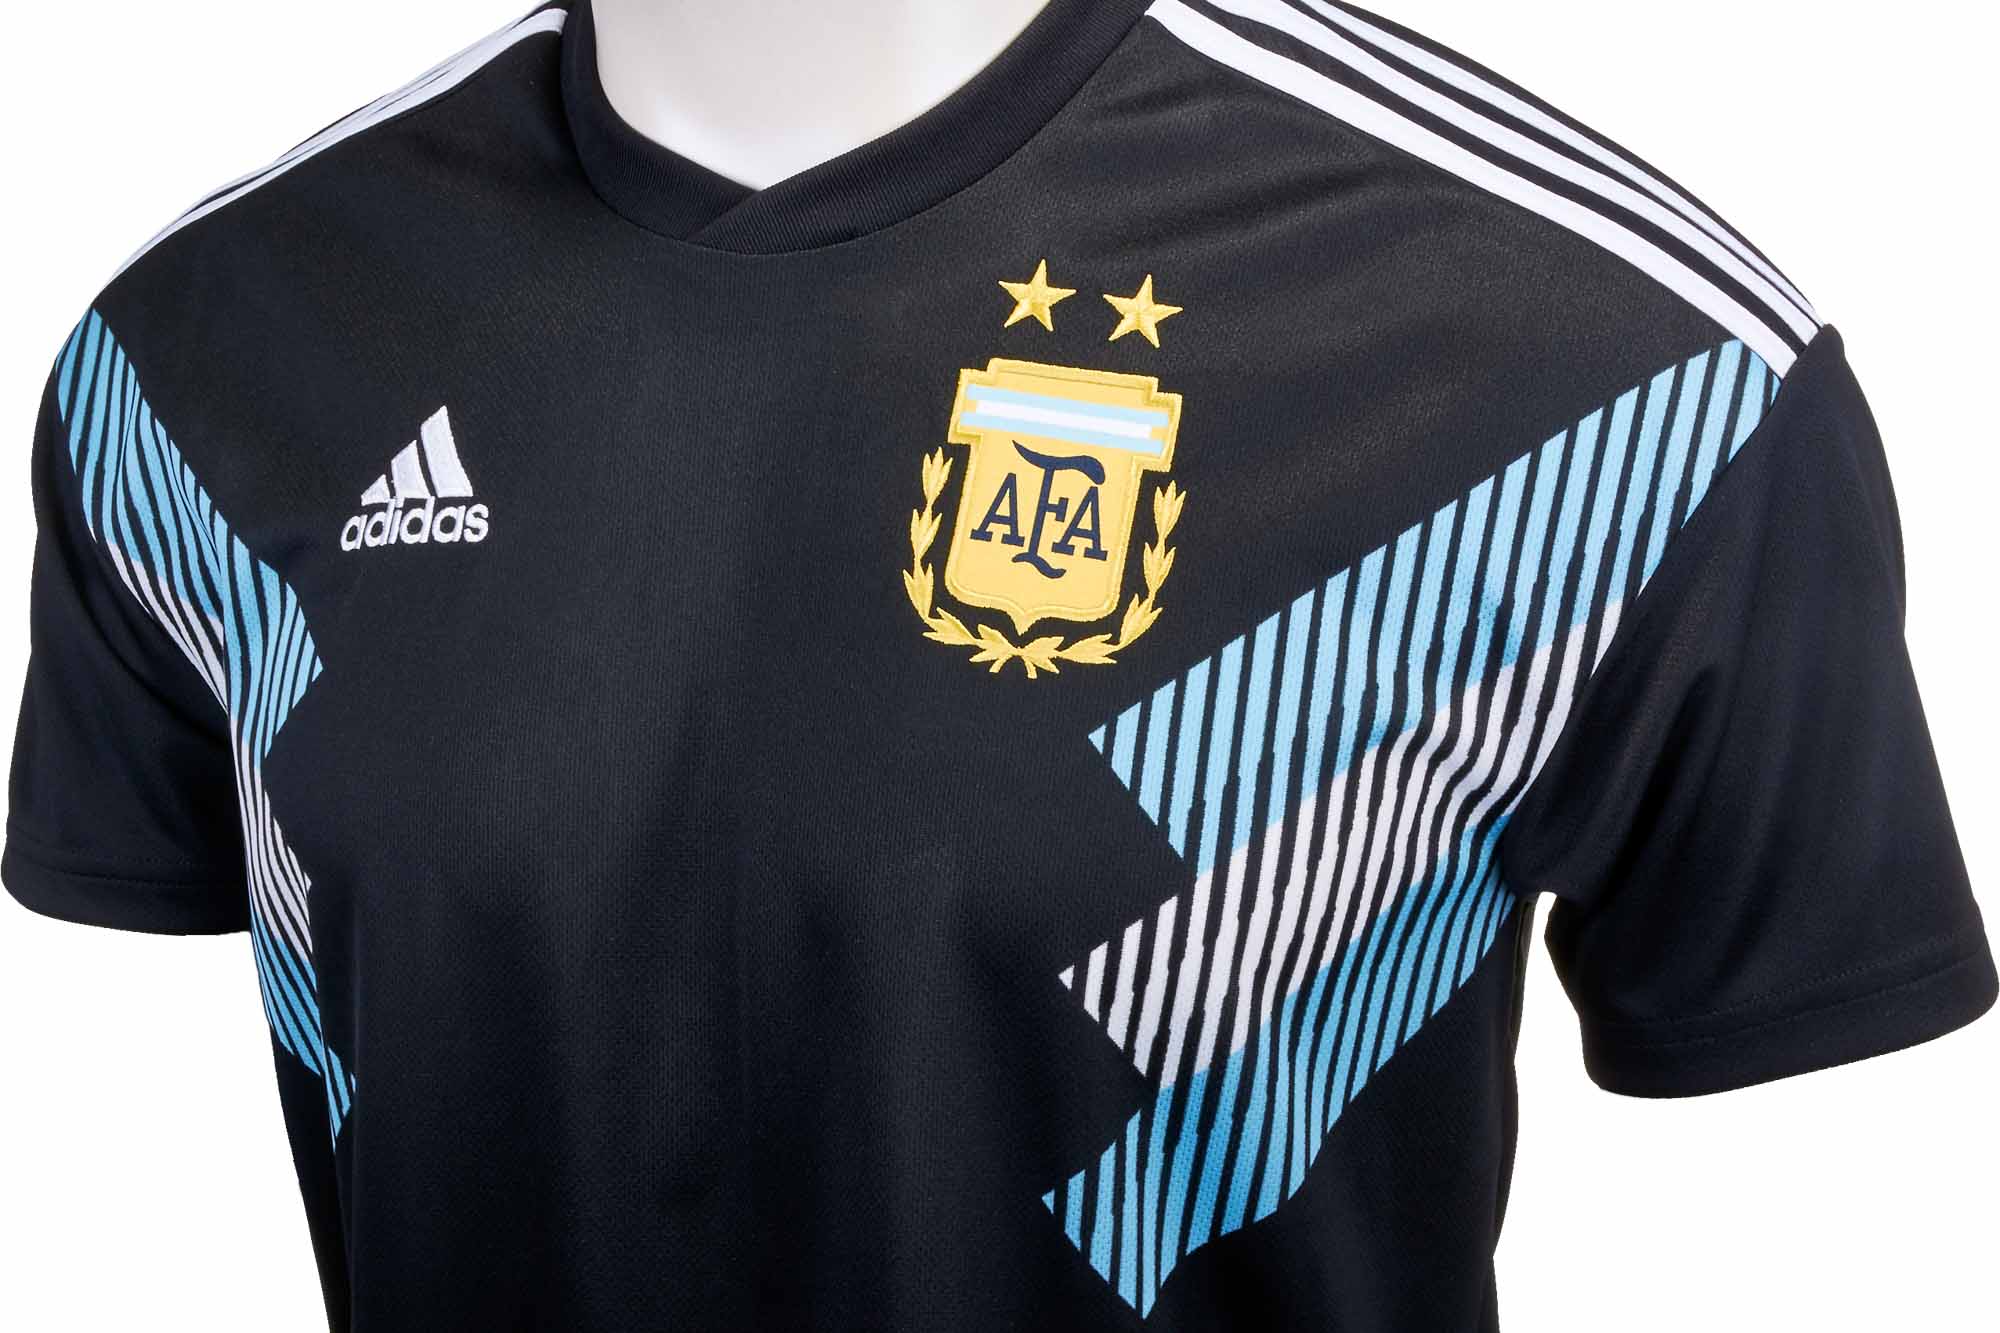 adidas argentina jersey 2018